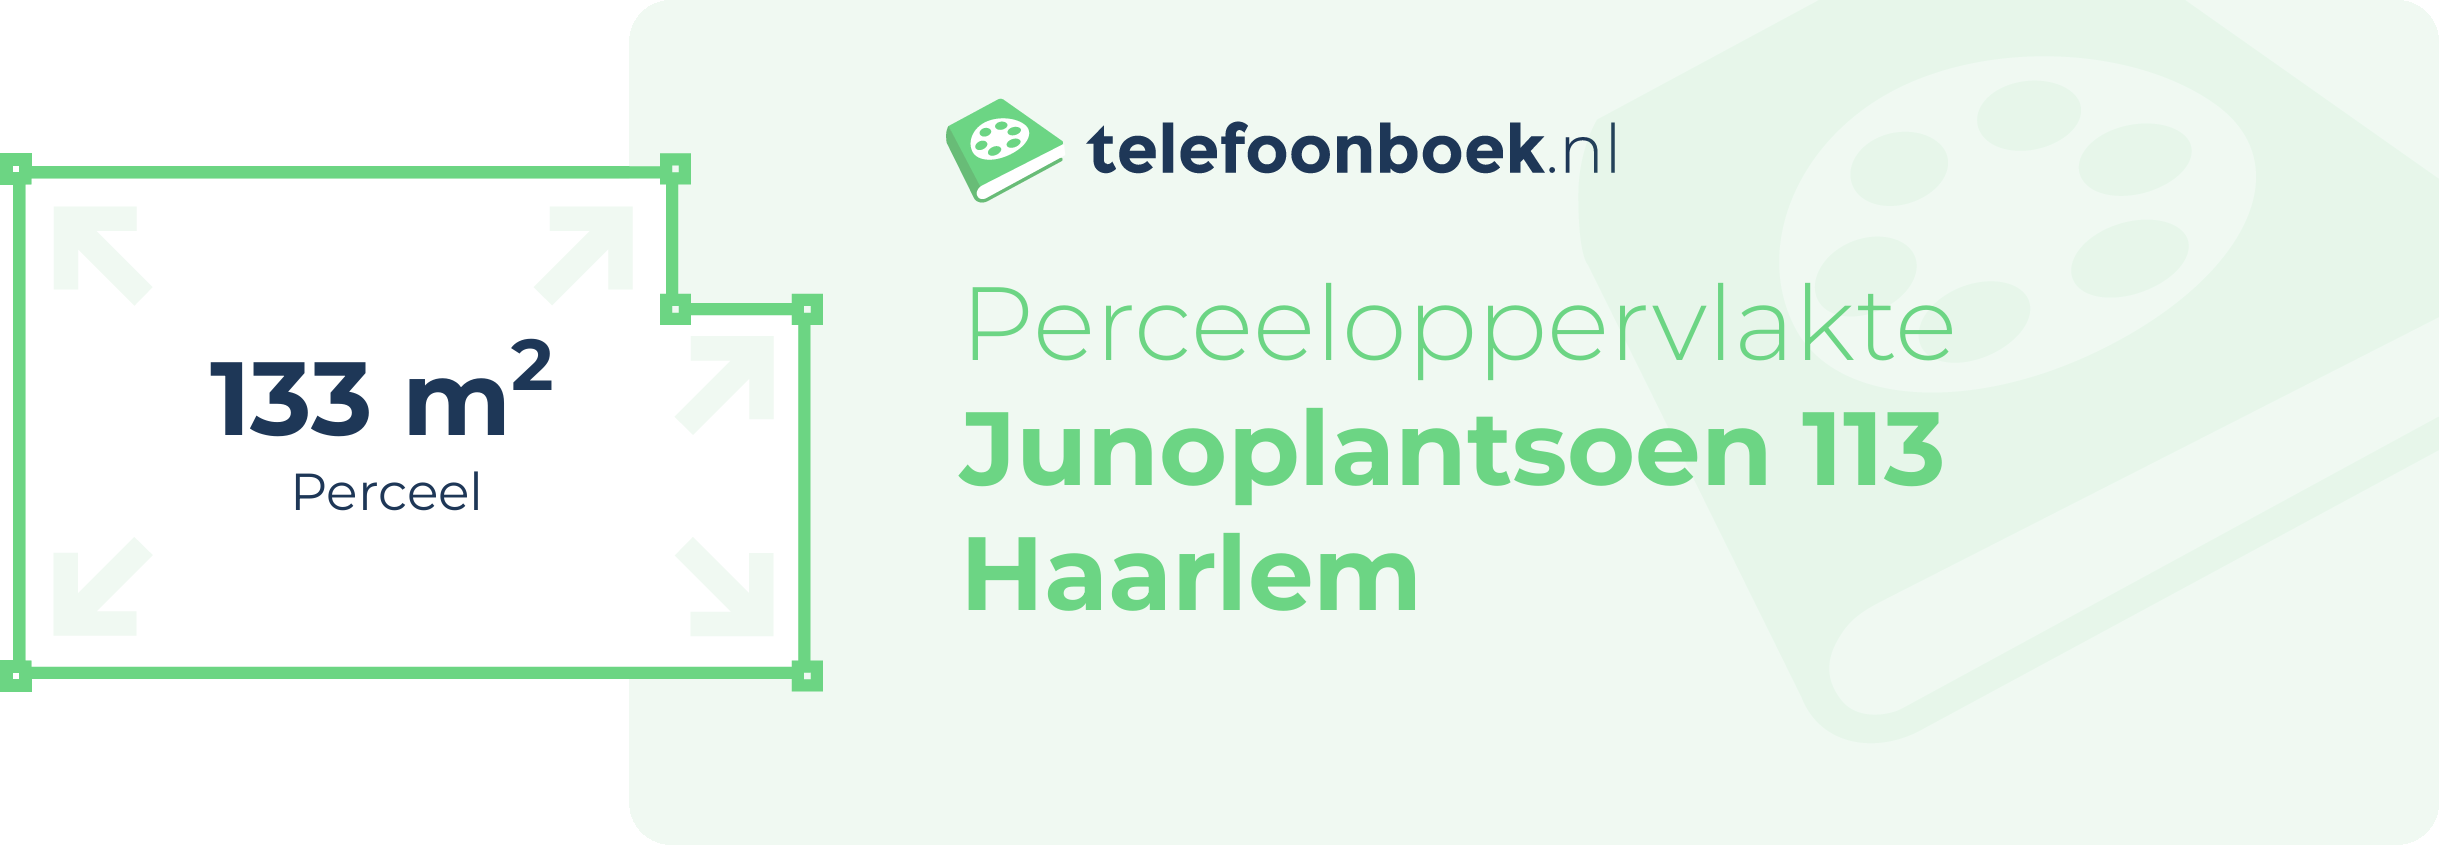 Perceeloppervlakte Junoplantsoen 113 Haarlem